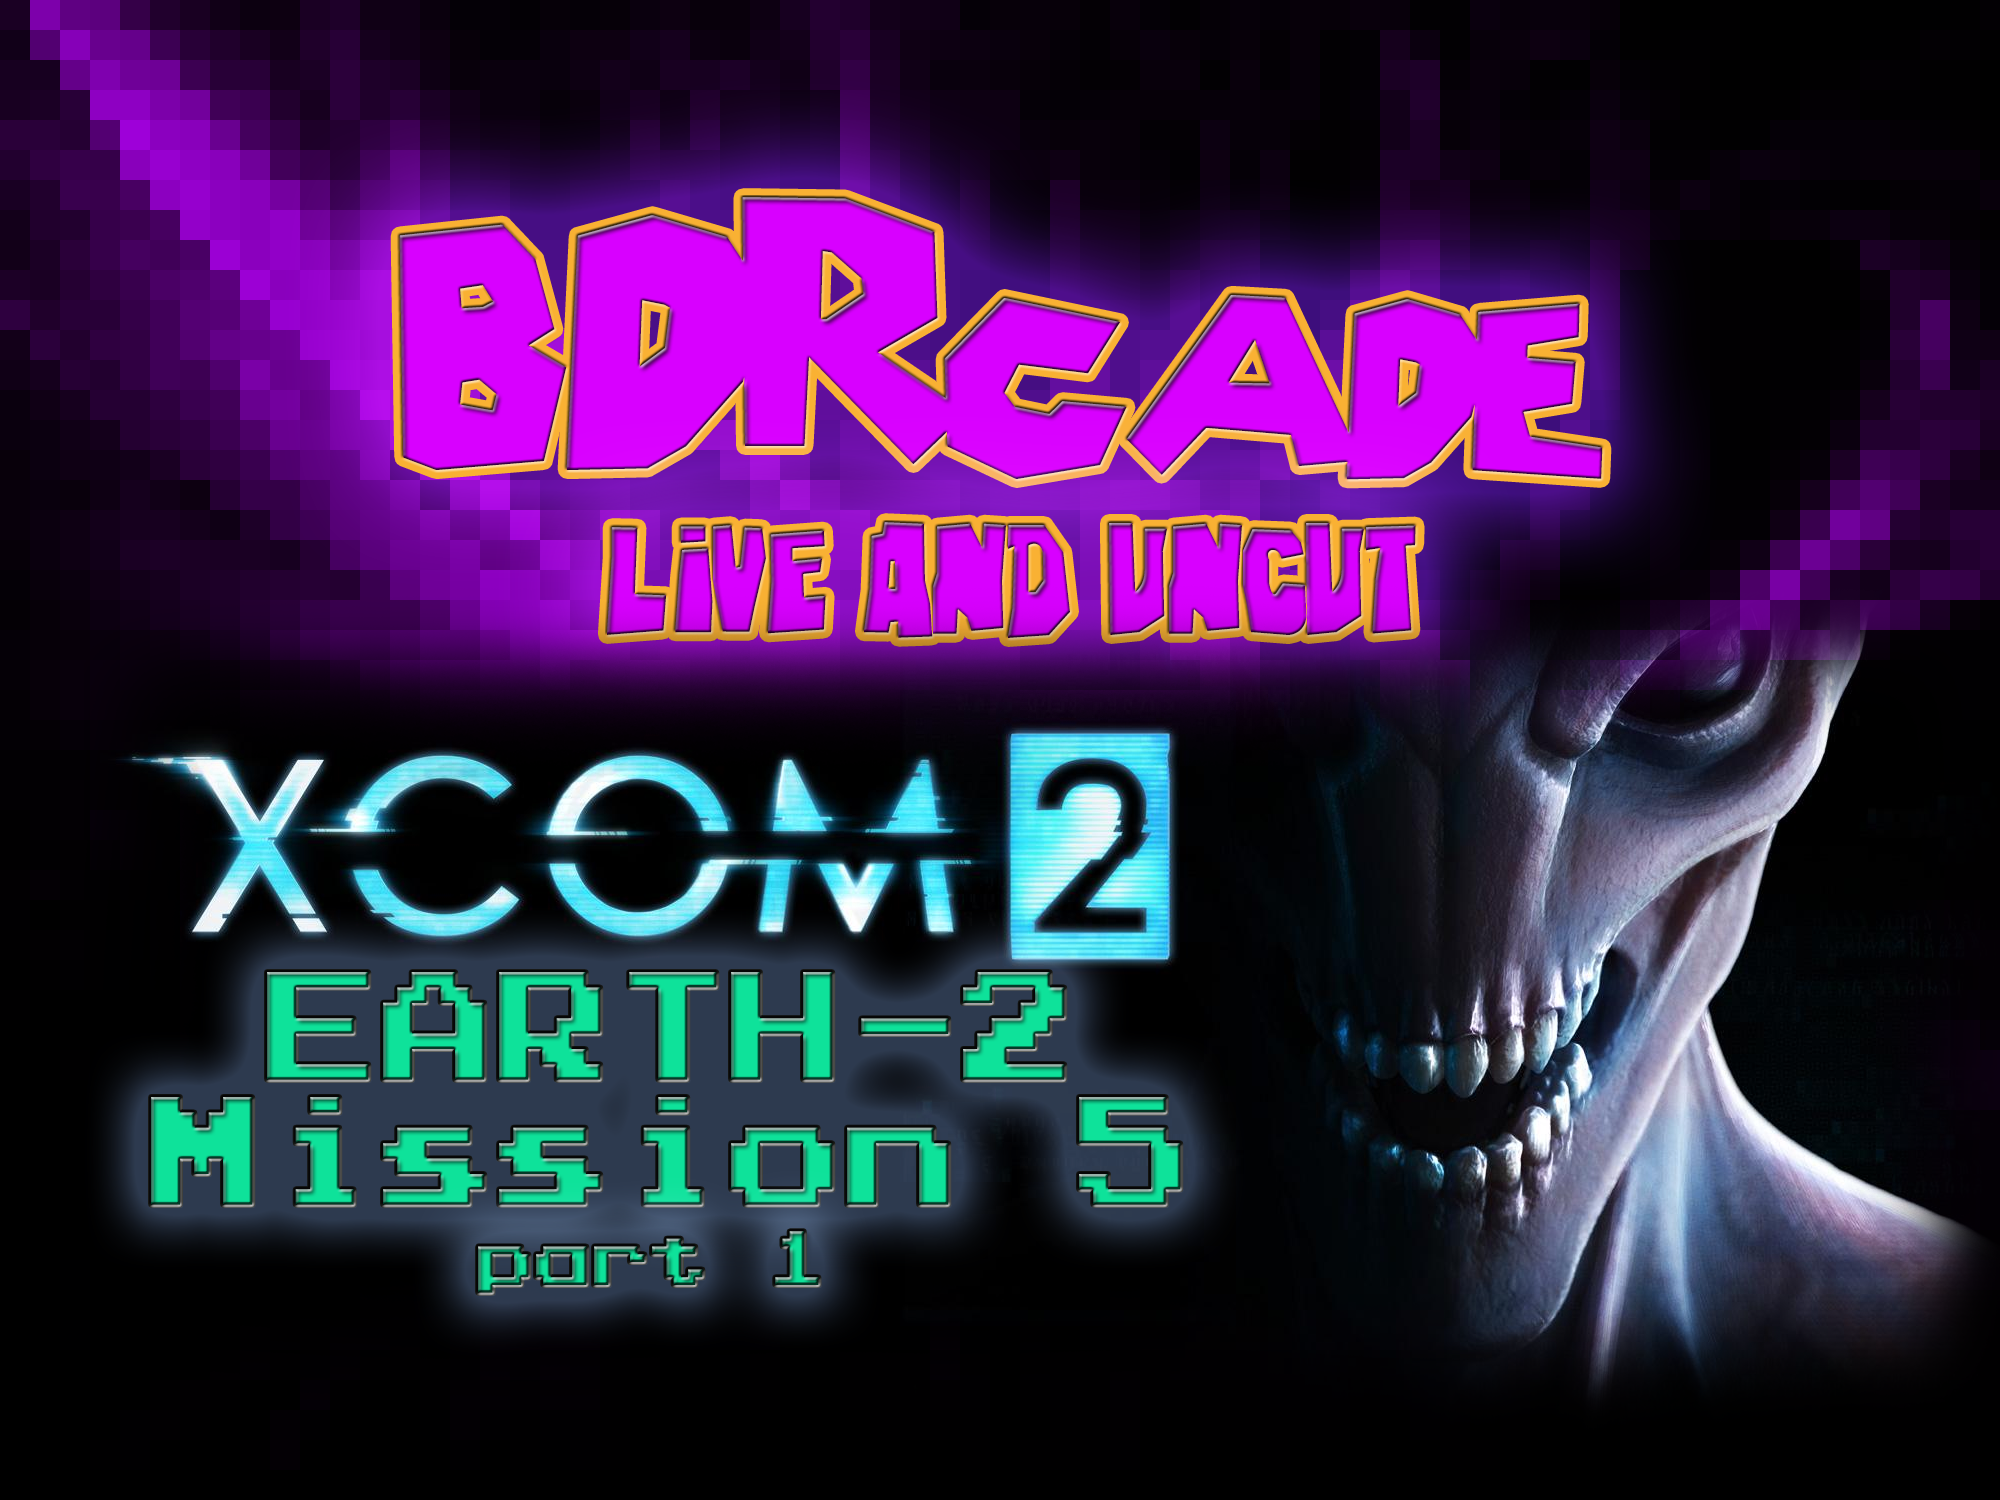 XCOM 2 (Earth-2) : Mission 5 Part 1 – A BDRcade Live Stream